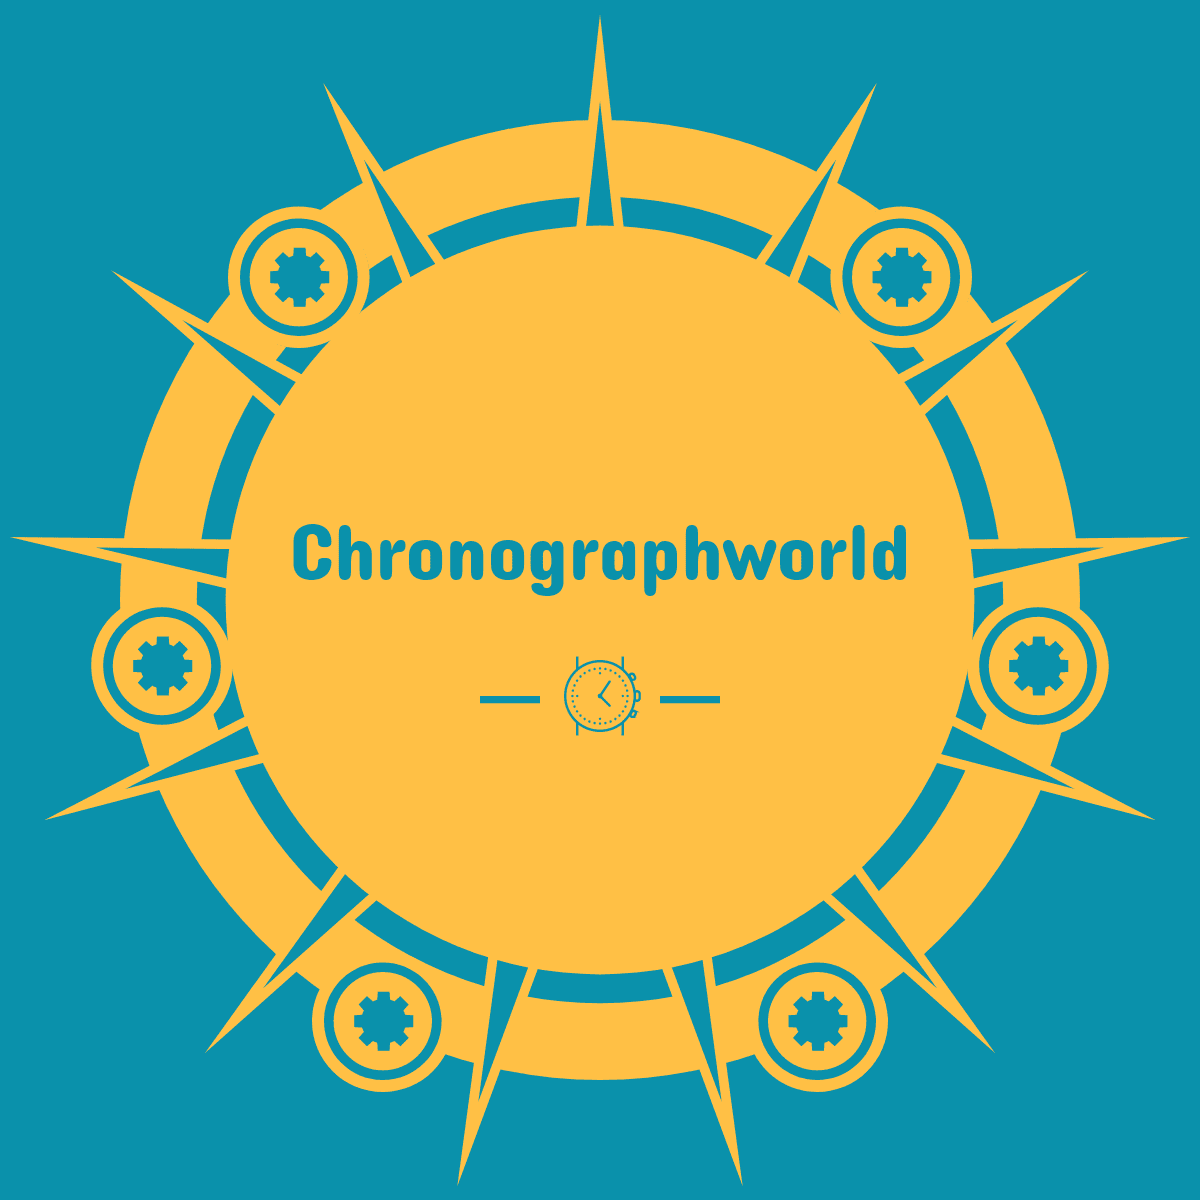 Chronographworld Ltd